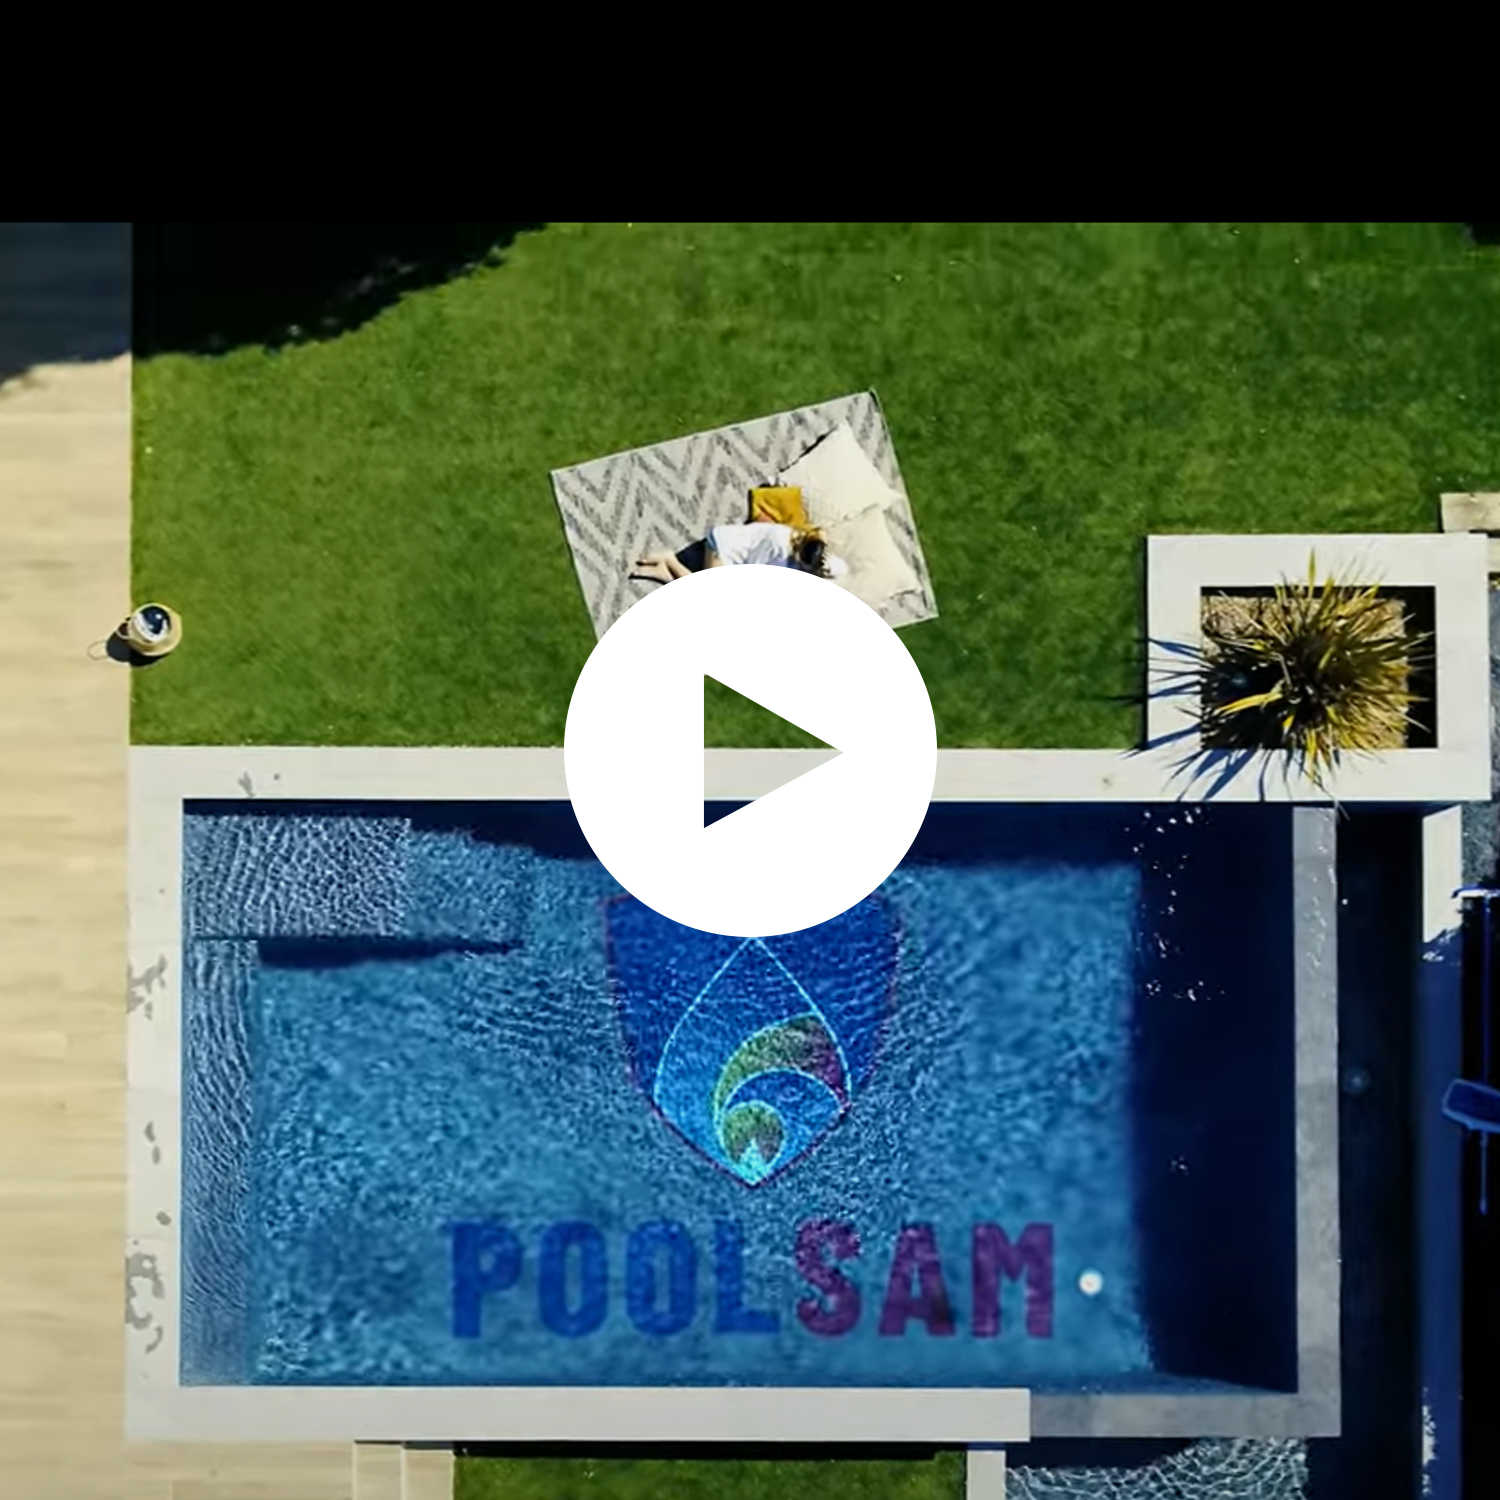 Pool Sam présentation